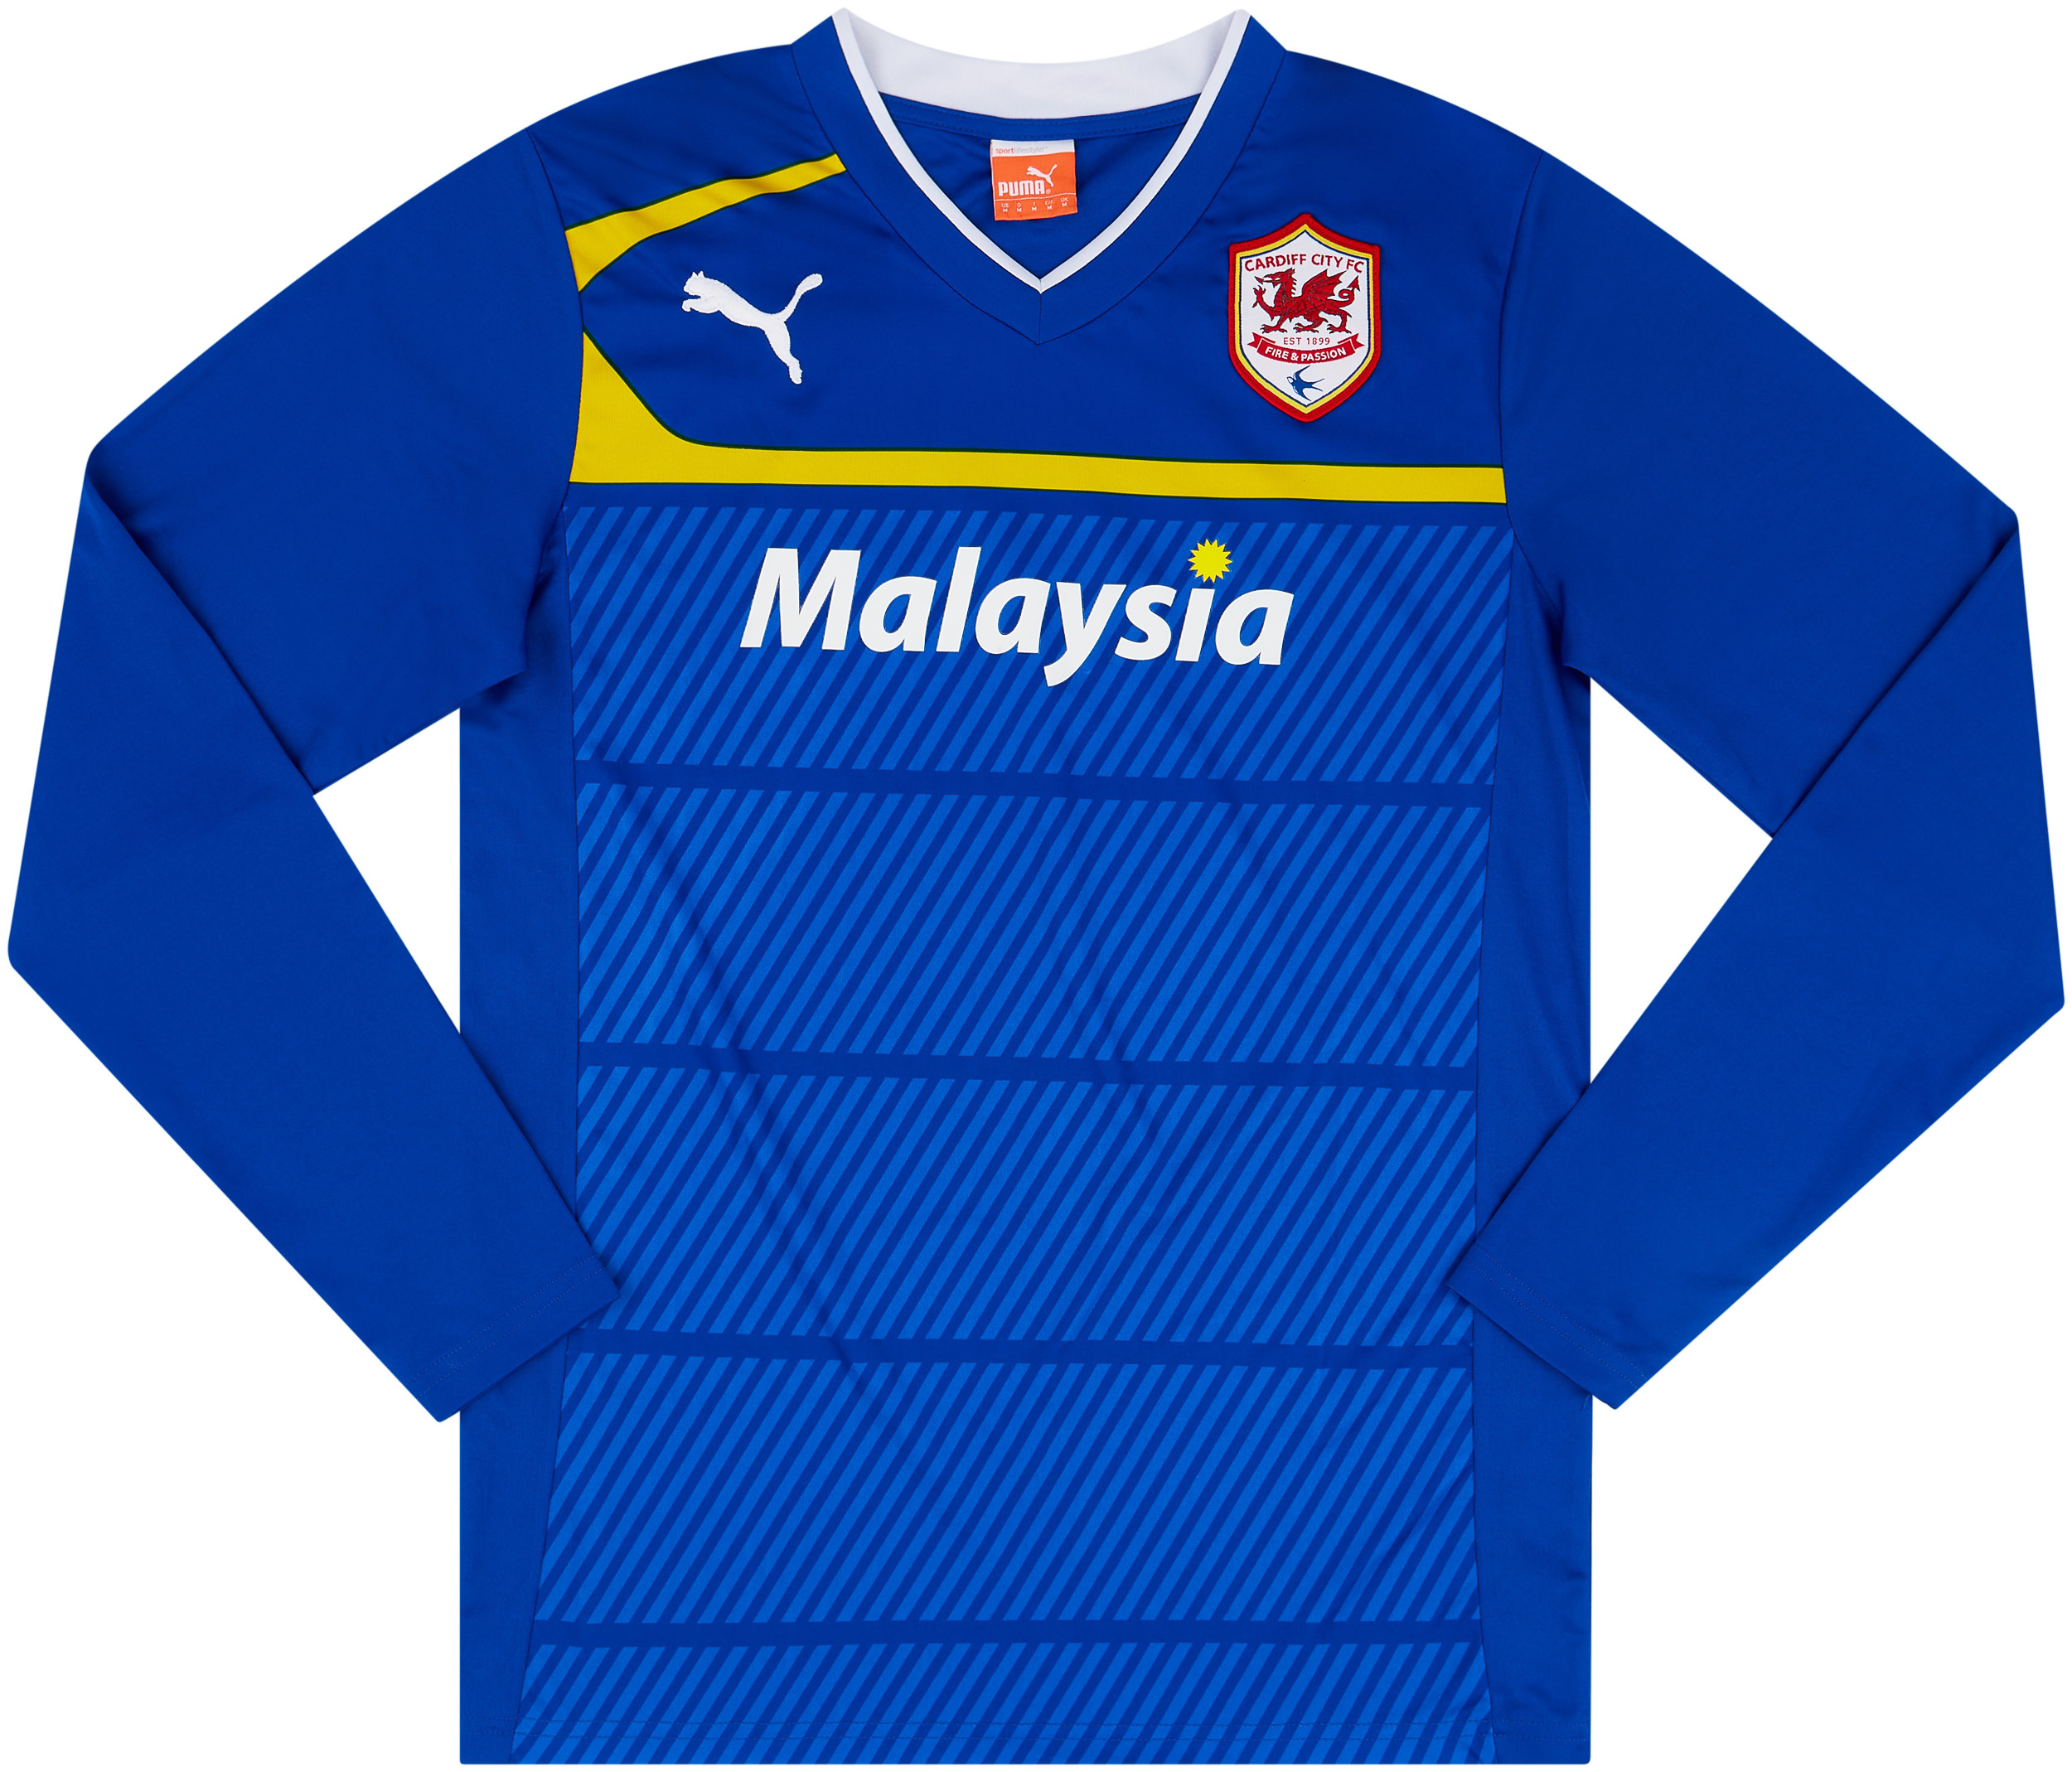 2012-13 Cardiff City Away Shirt - 9/10 - ()